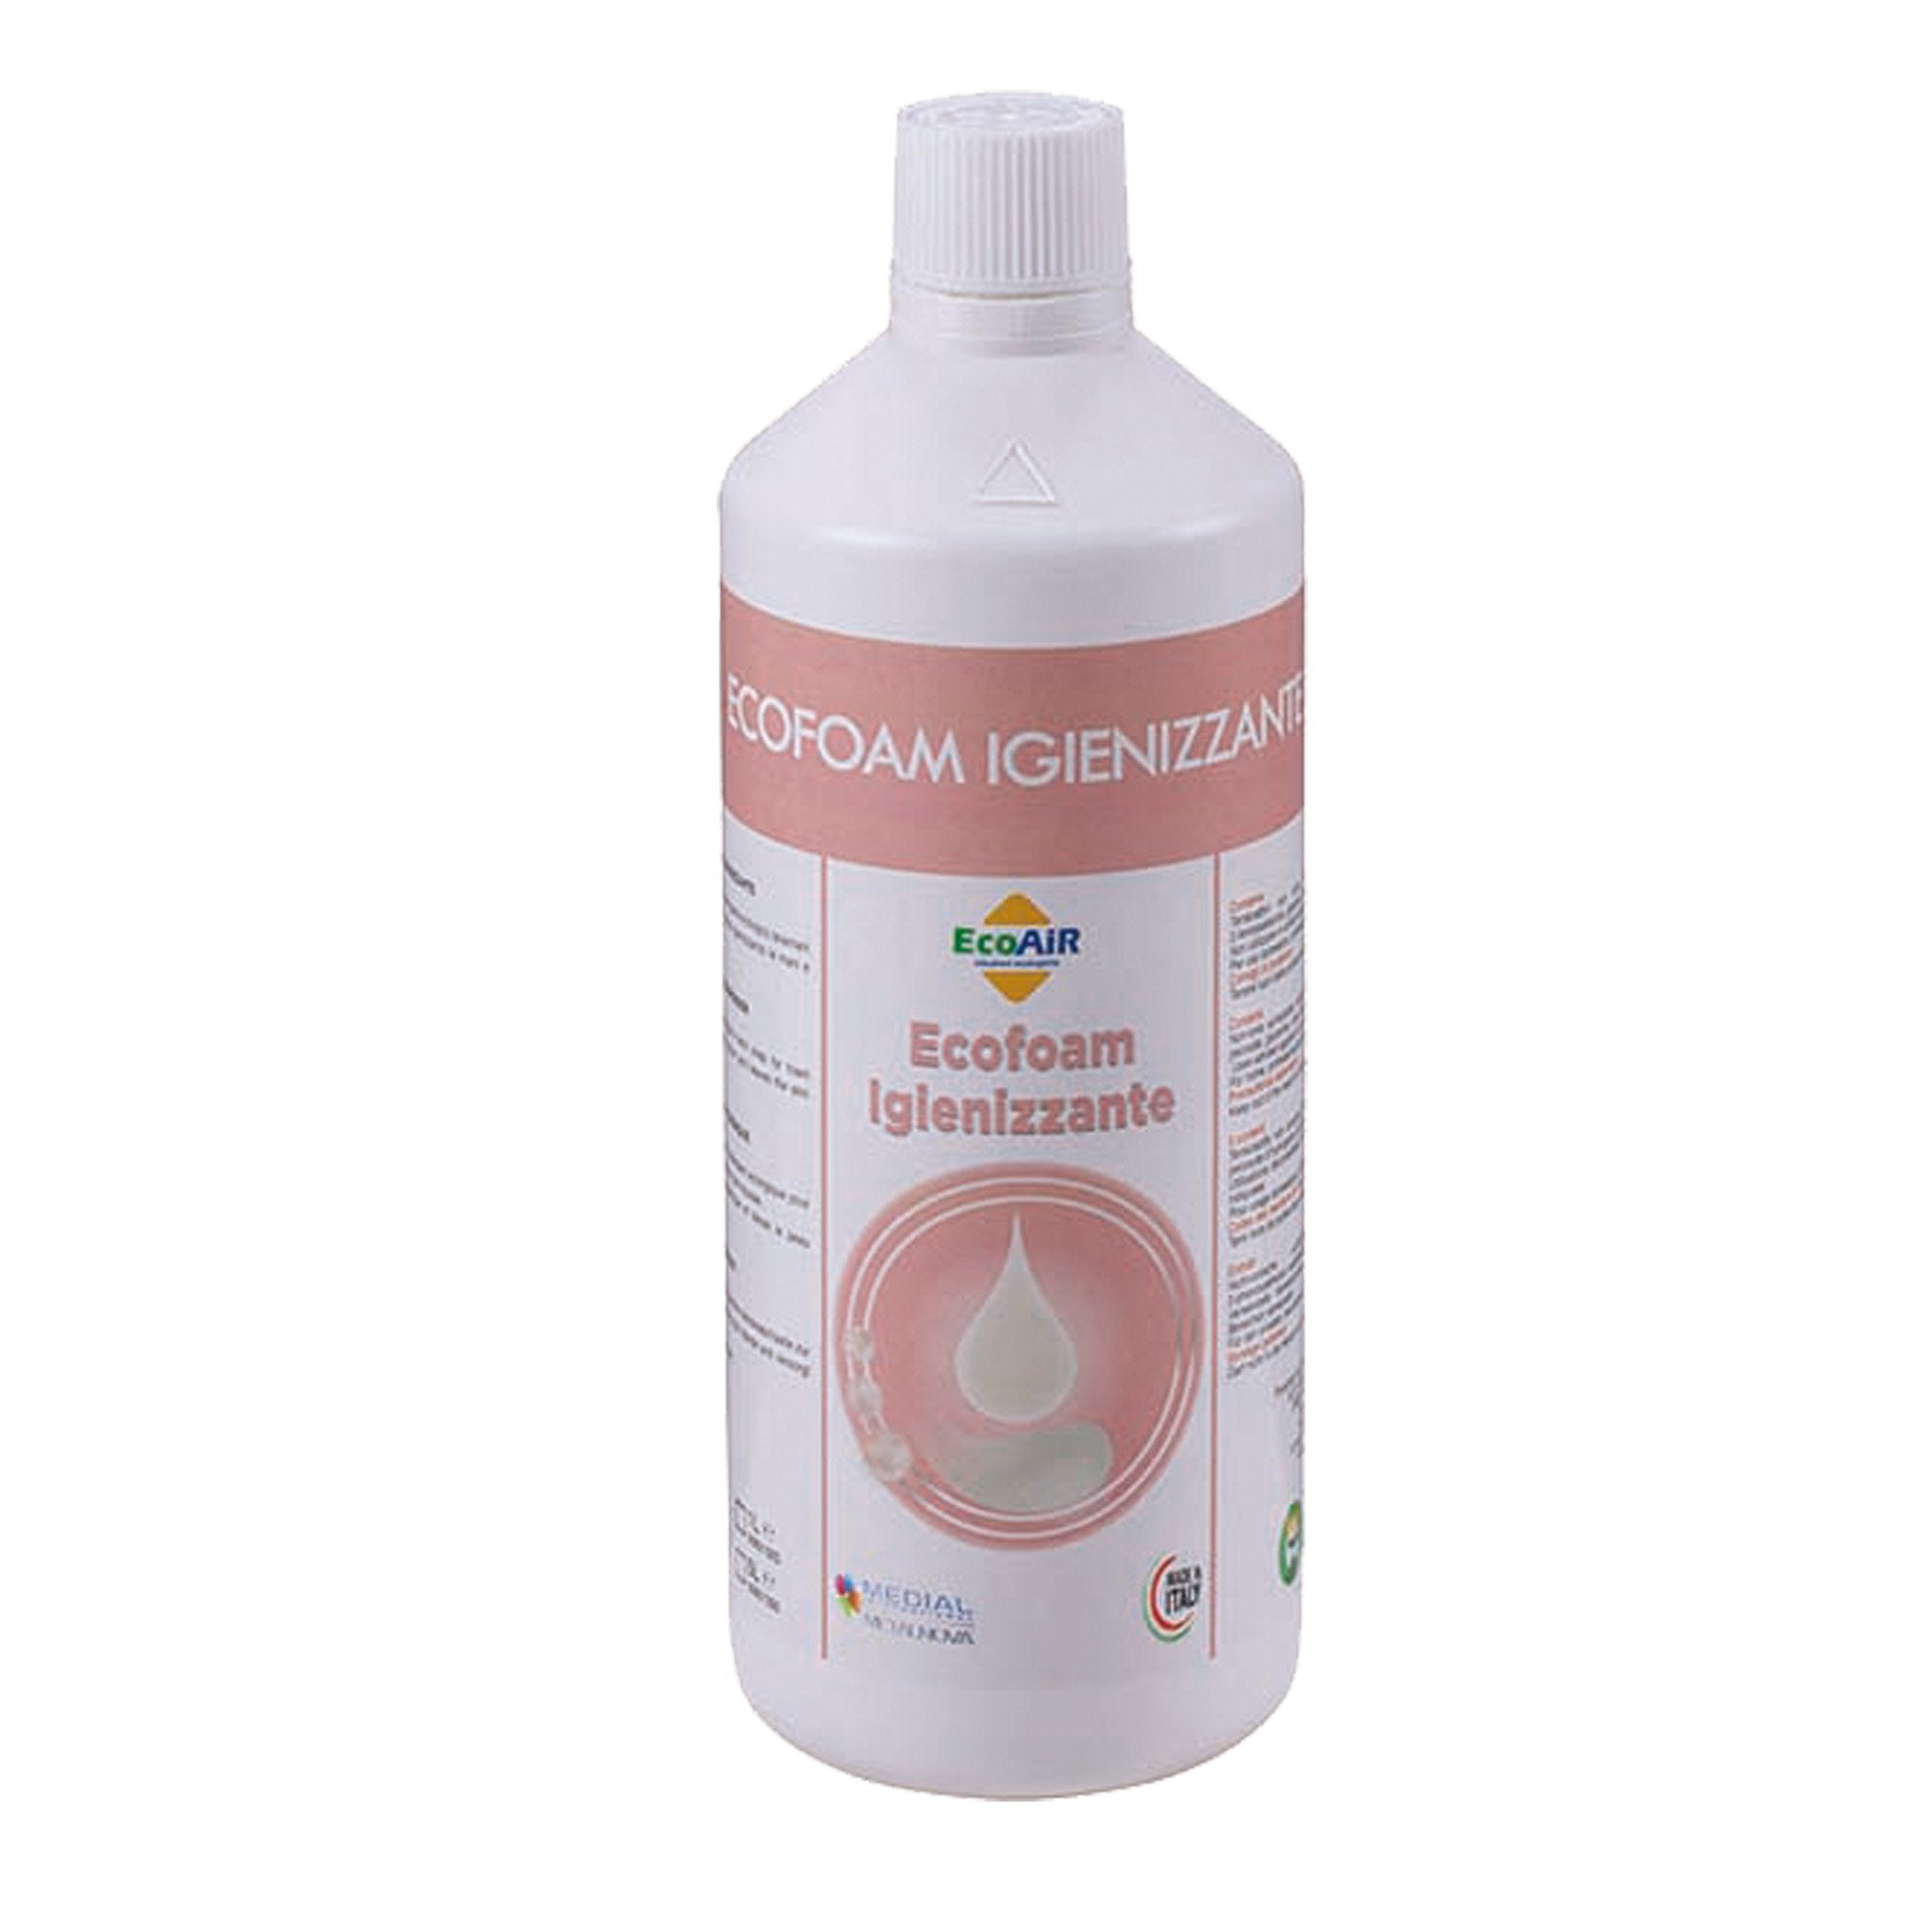 medialinternational-sapone-igienizzante-mousse-ecofoam-1lt-dispenser-schiuma